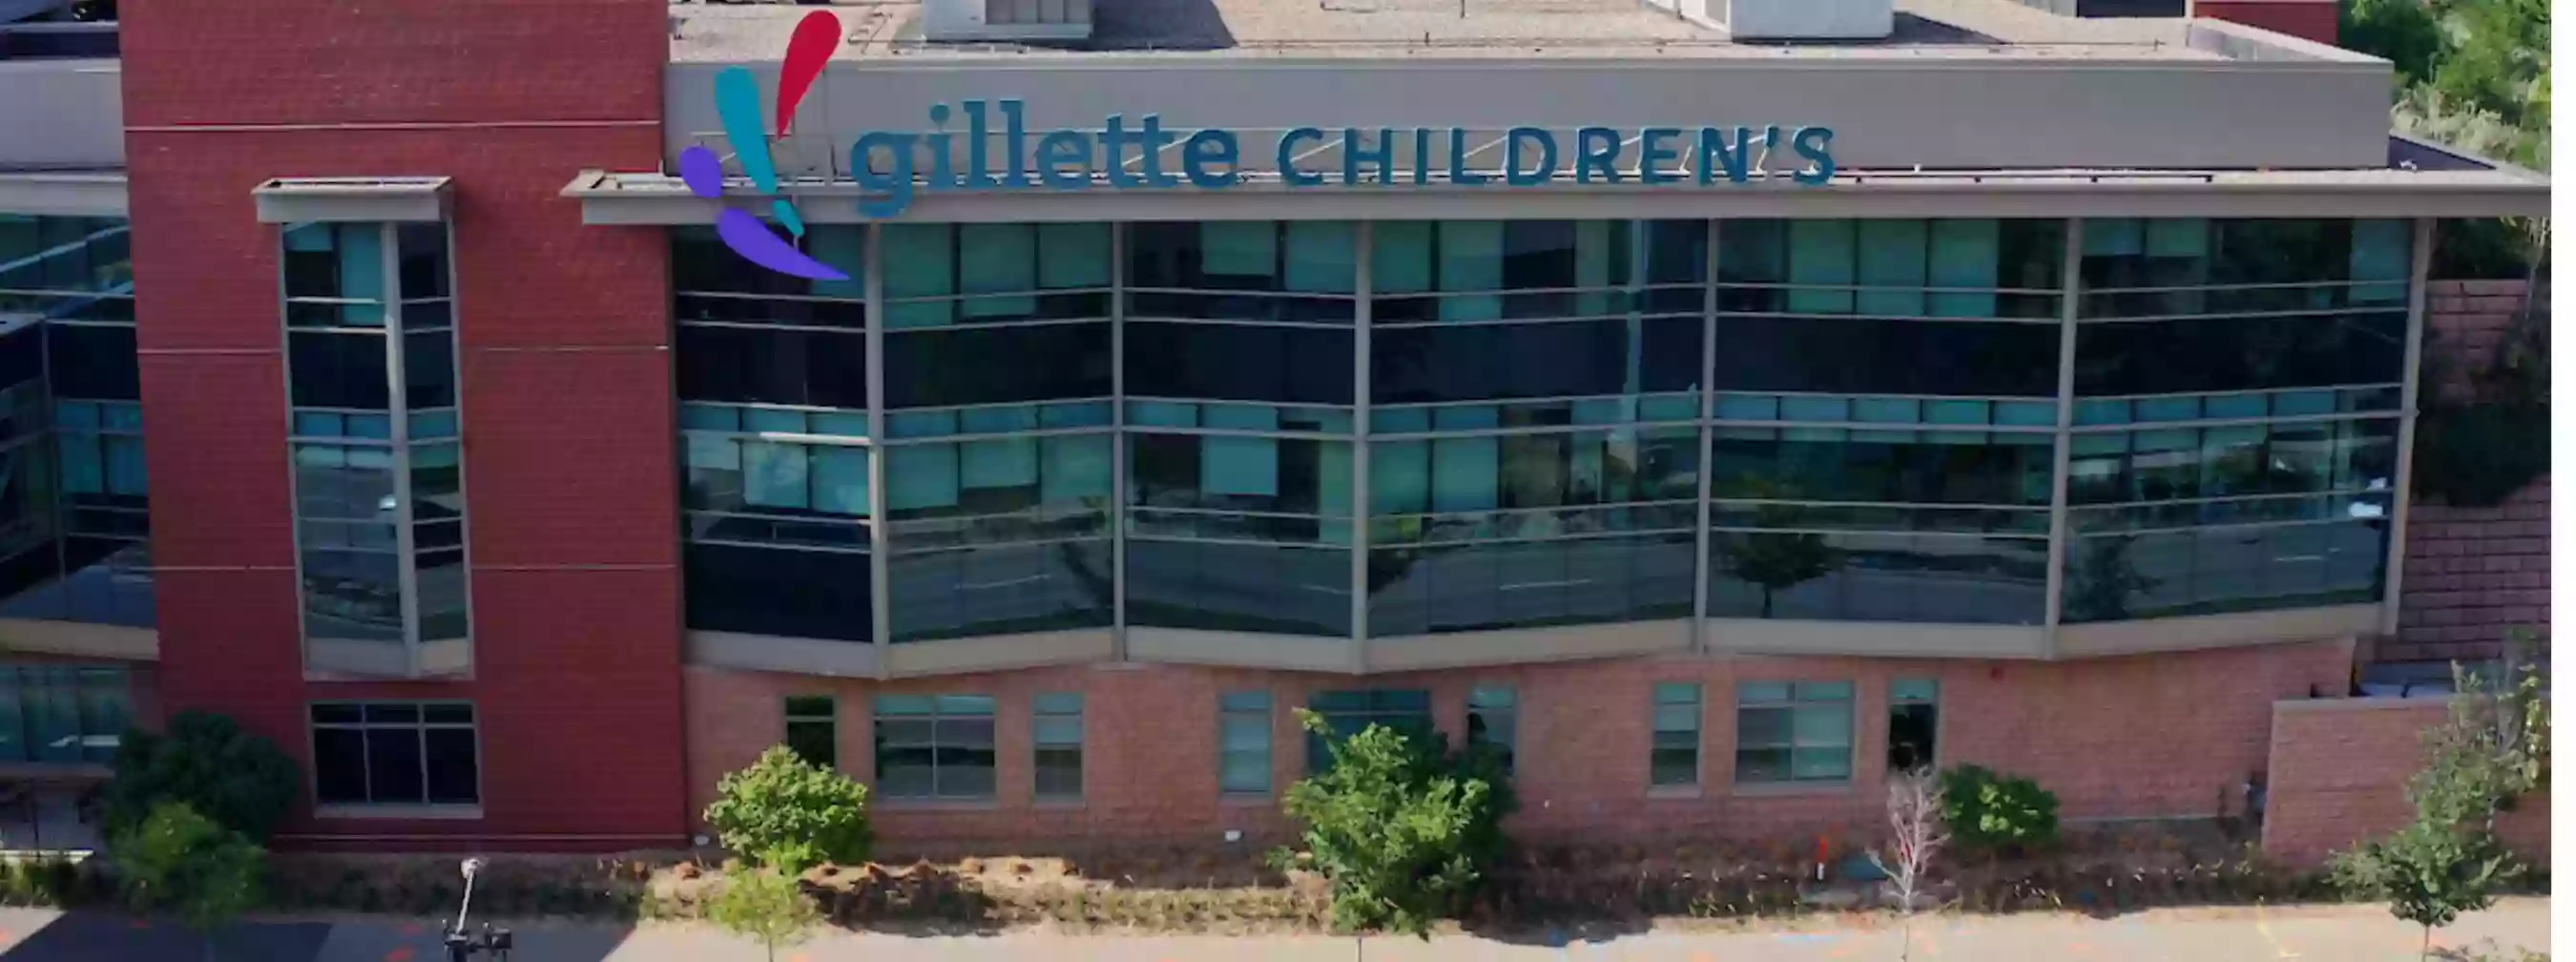 Gillette Children's Hospital and Clinics